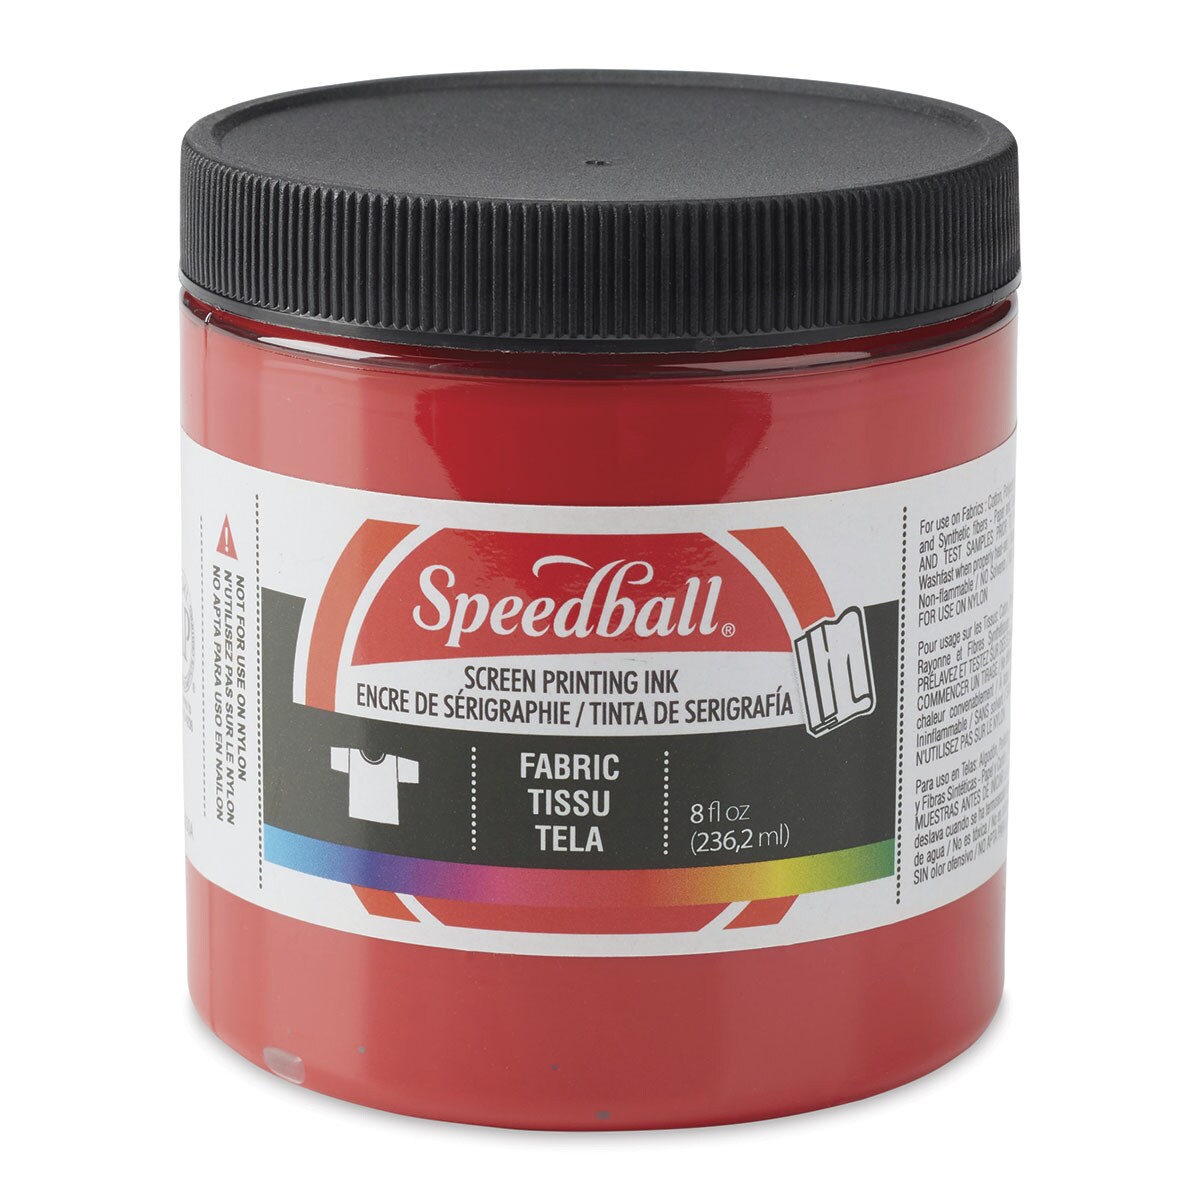 Speedball Fabric Screen Printing Ink 8 oz Jar - Red